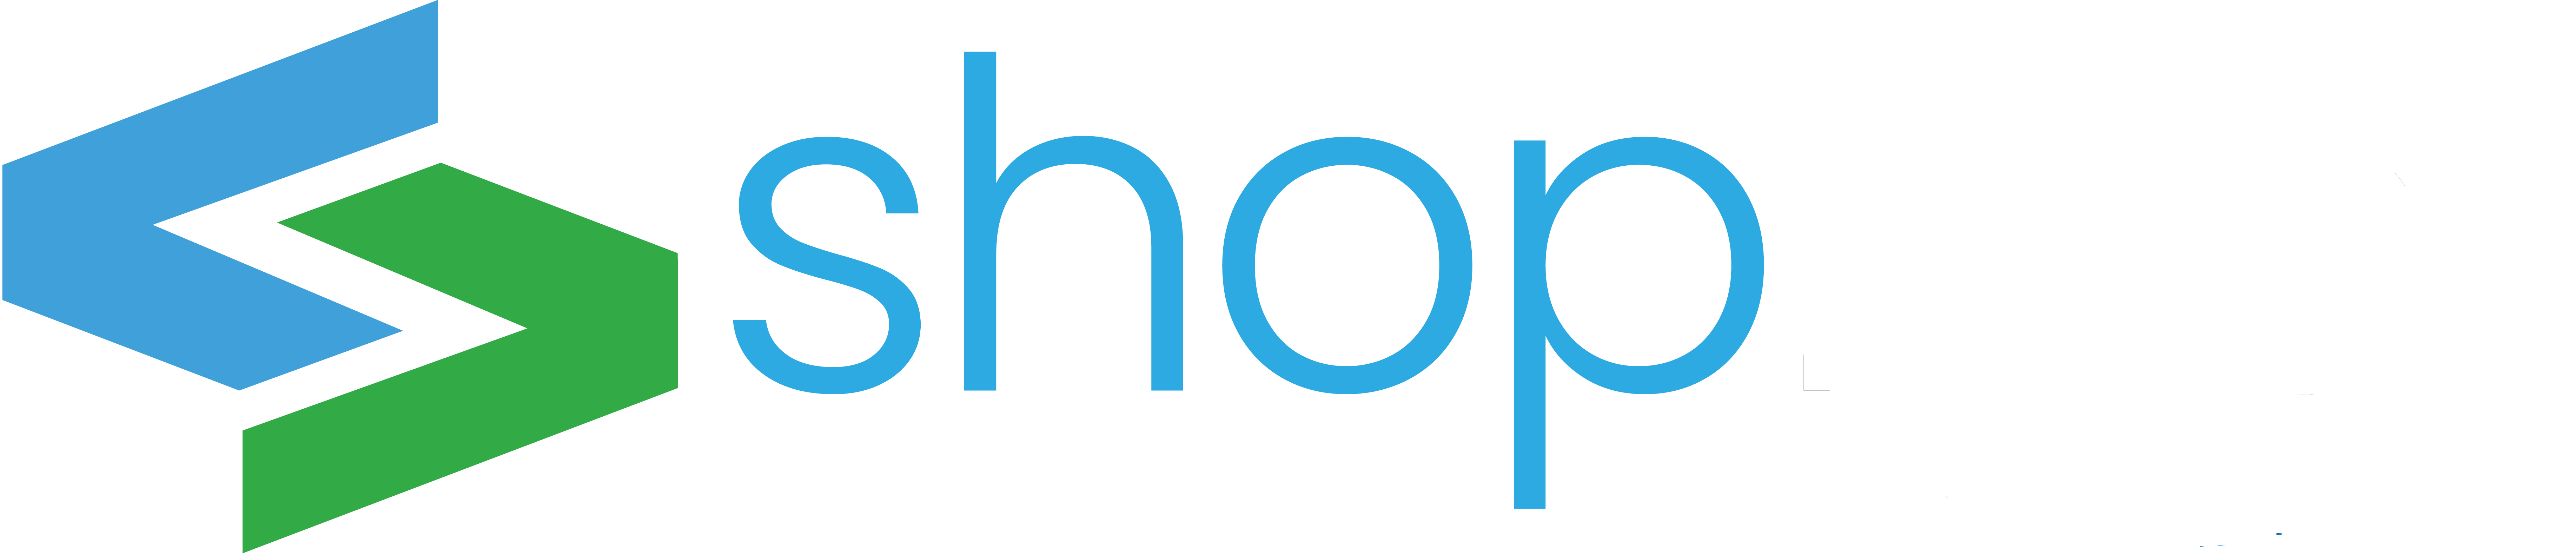 shopiget logo